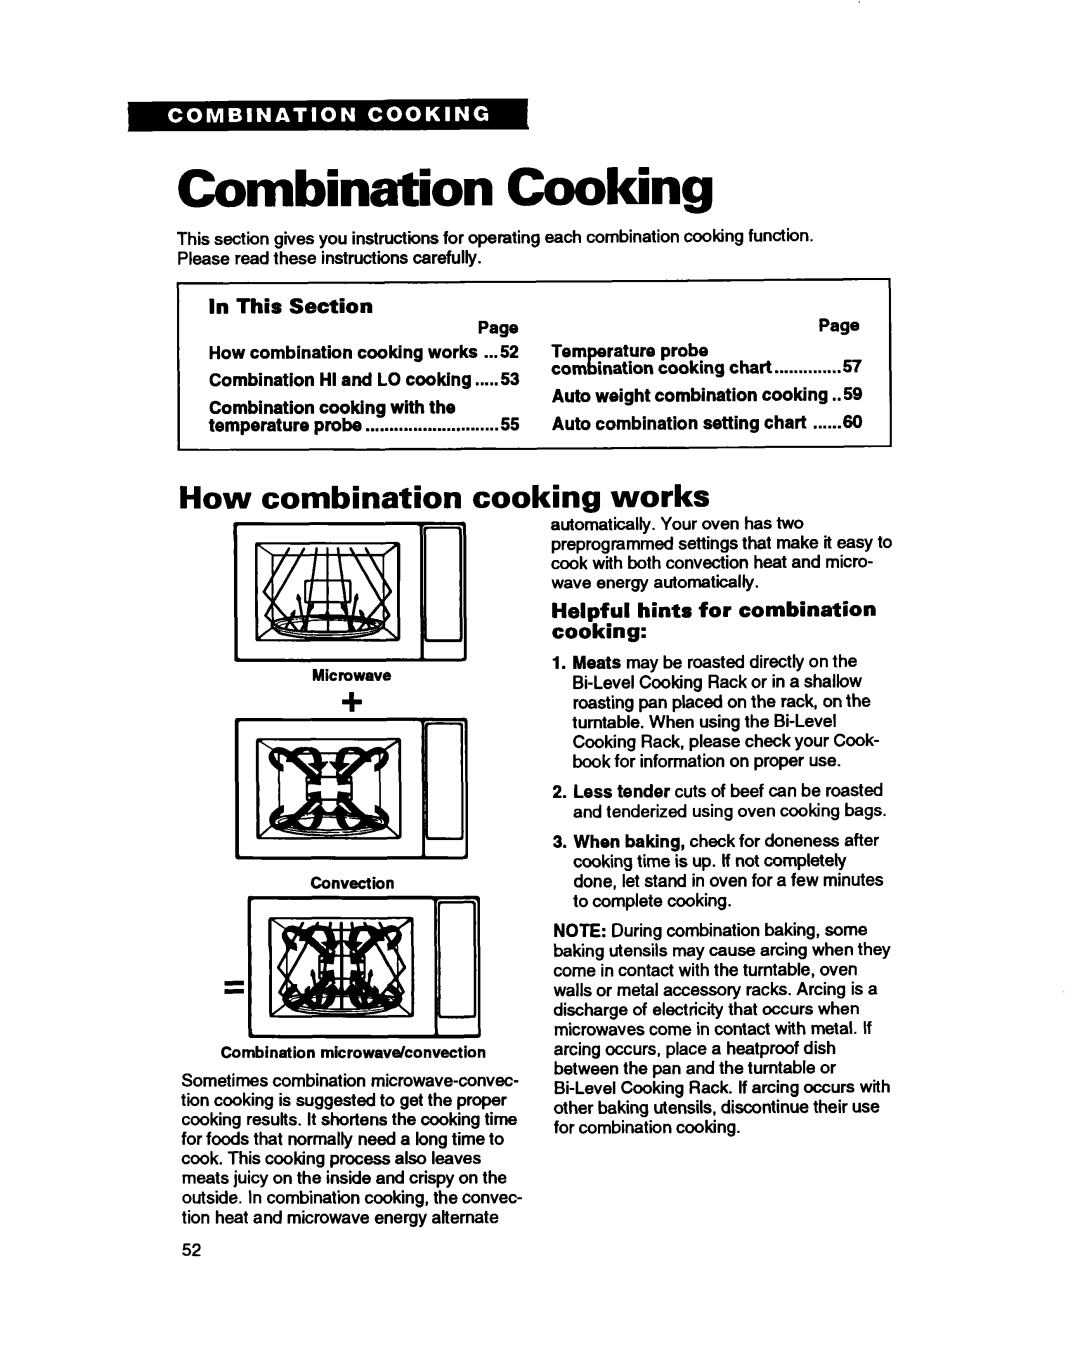 Whirlpool MC8130XA Combination Cooking, How combination, cooking works, Helpful hints for combination cooking, Tern rature 